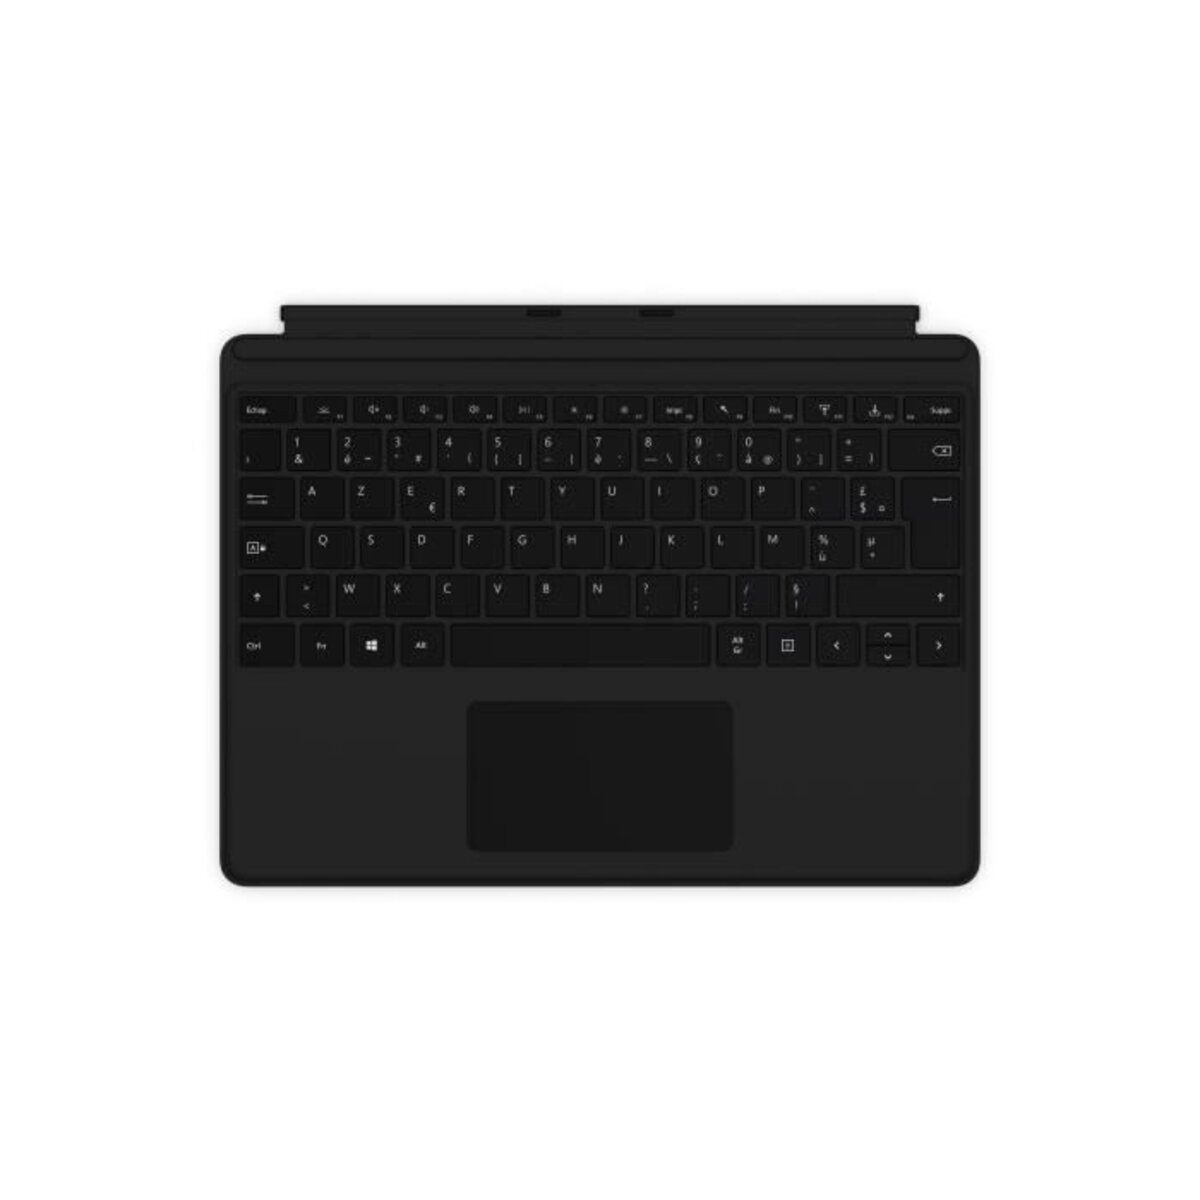 Microsoft Surface Pro X Keyboard Clavier Azerty Noir La Poste